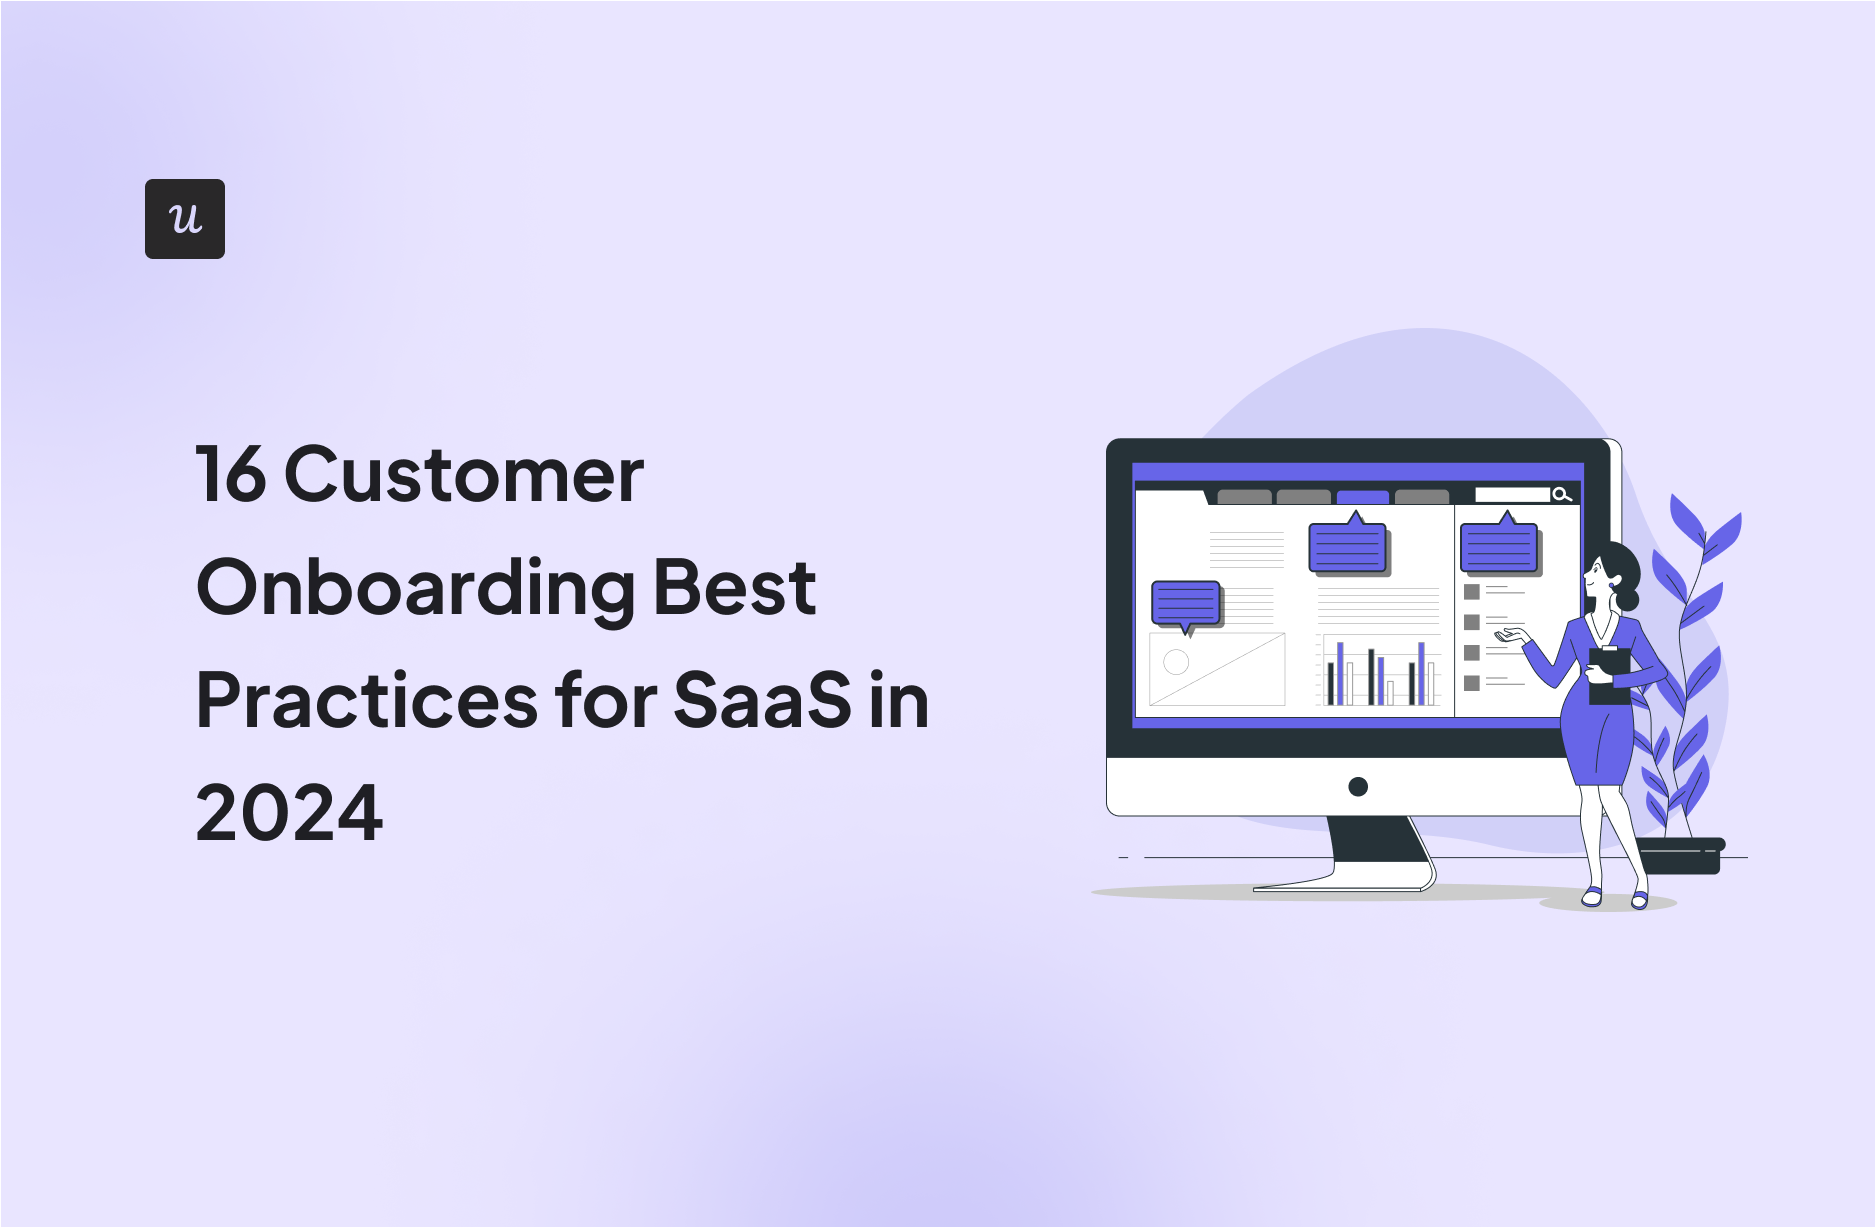 16 Customer Onboarding Best Practices for SaaS in 2024